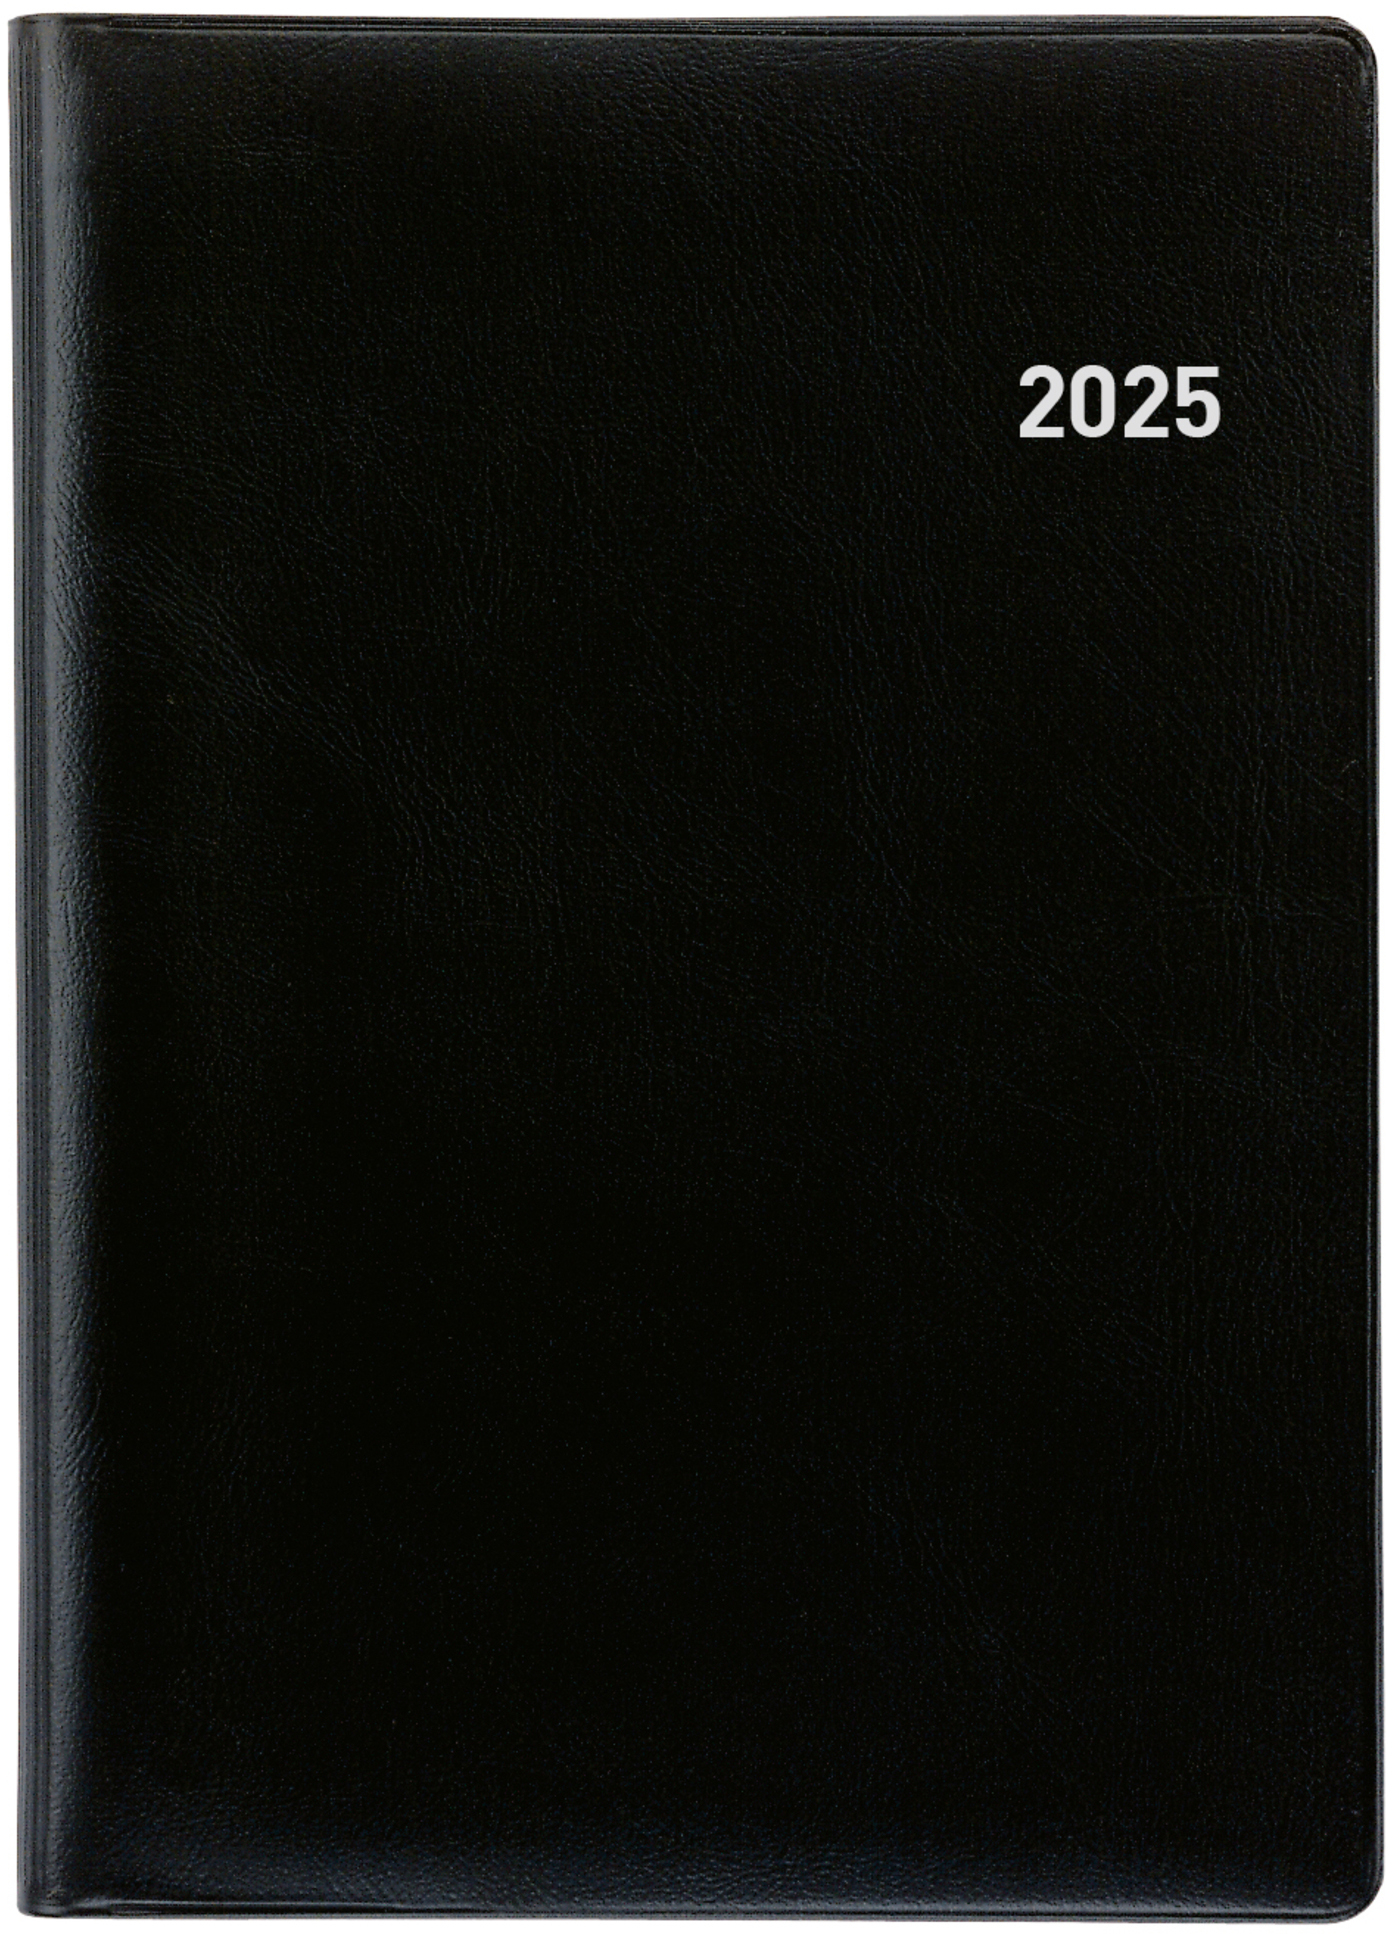 BIELLA Agenda Glasgow 2025 855312020025 1M/2P noir ML 10x13.9cm